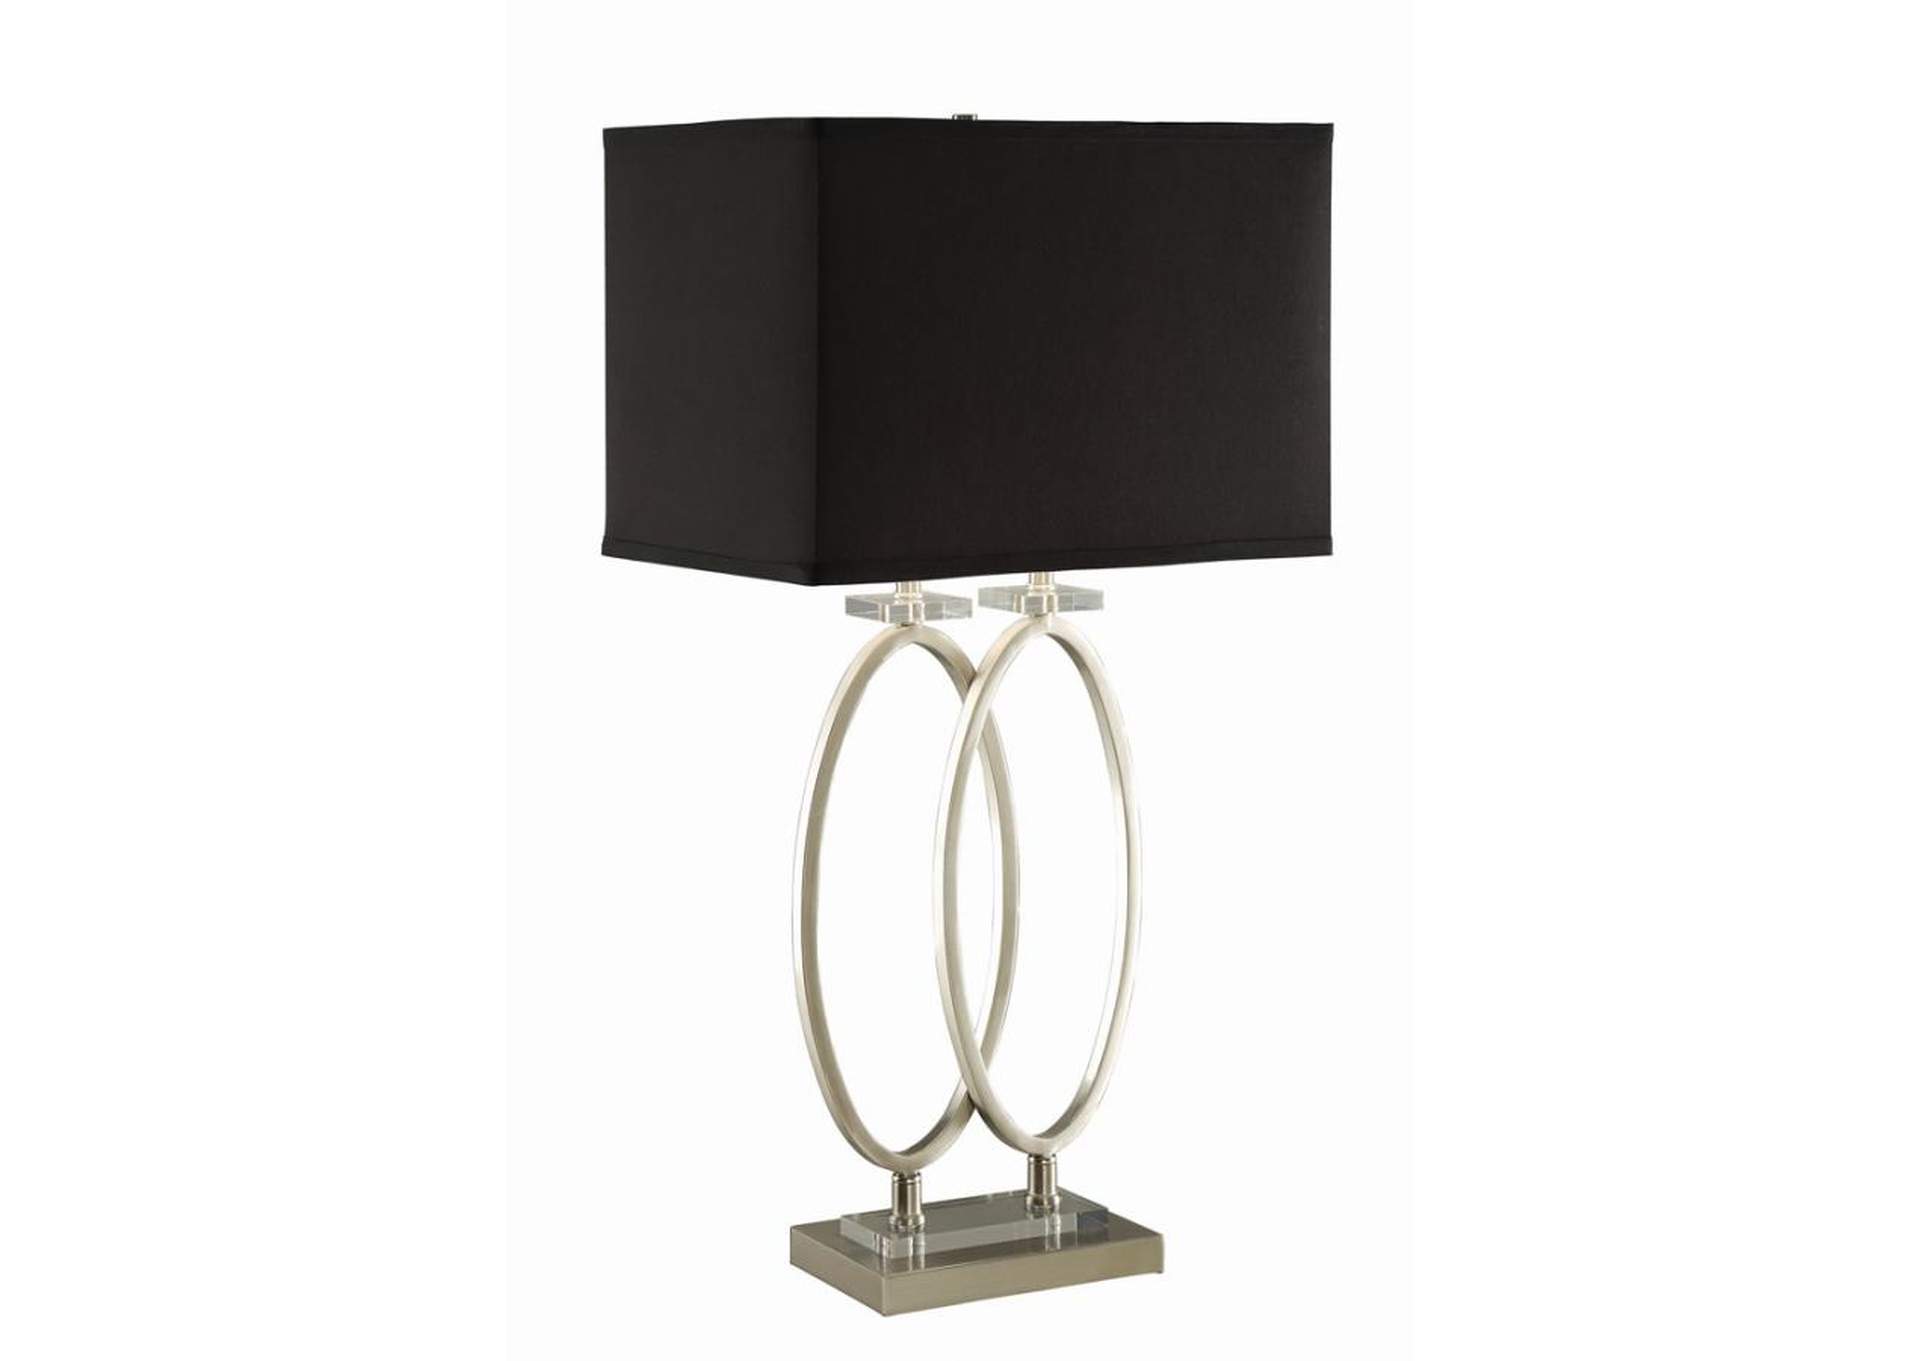 Rectangular Shade Table Lamp Black and Brushed Nickel,Coaster Furniture